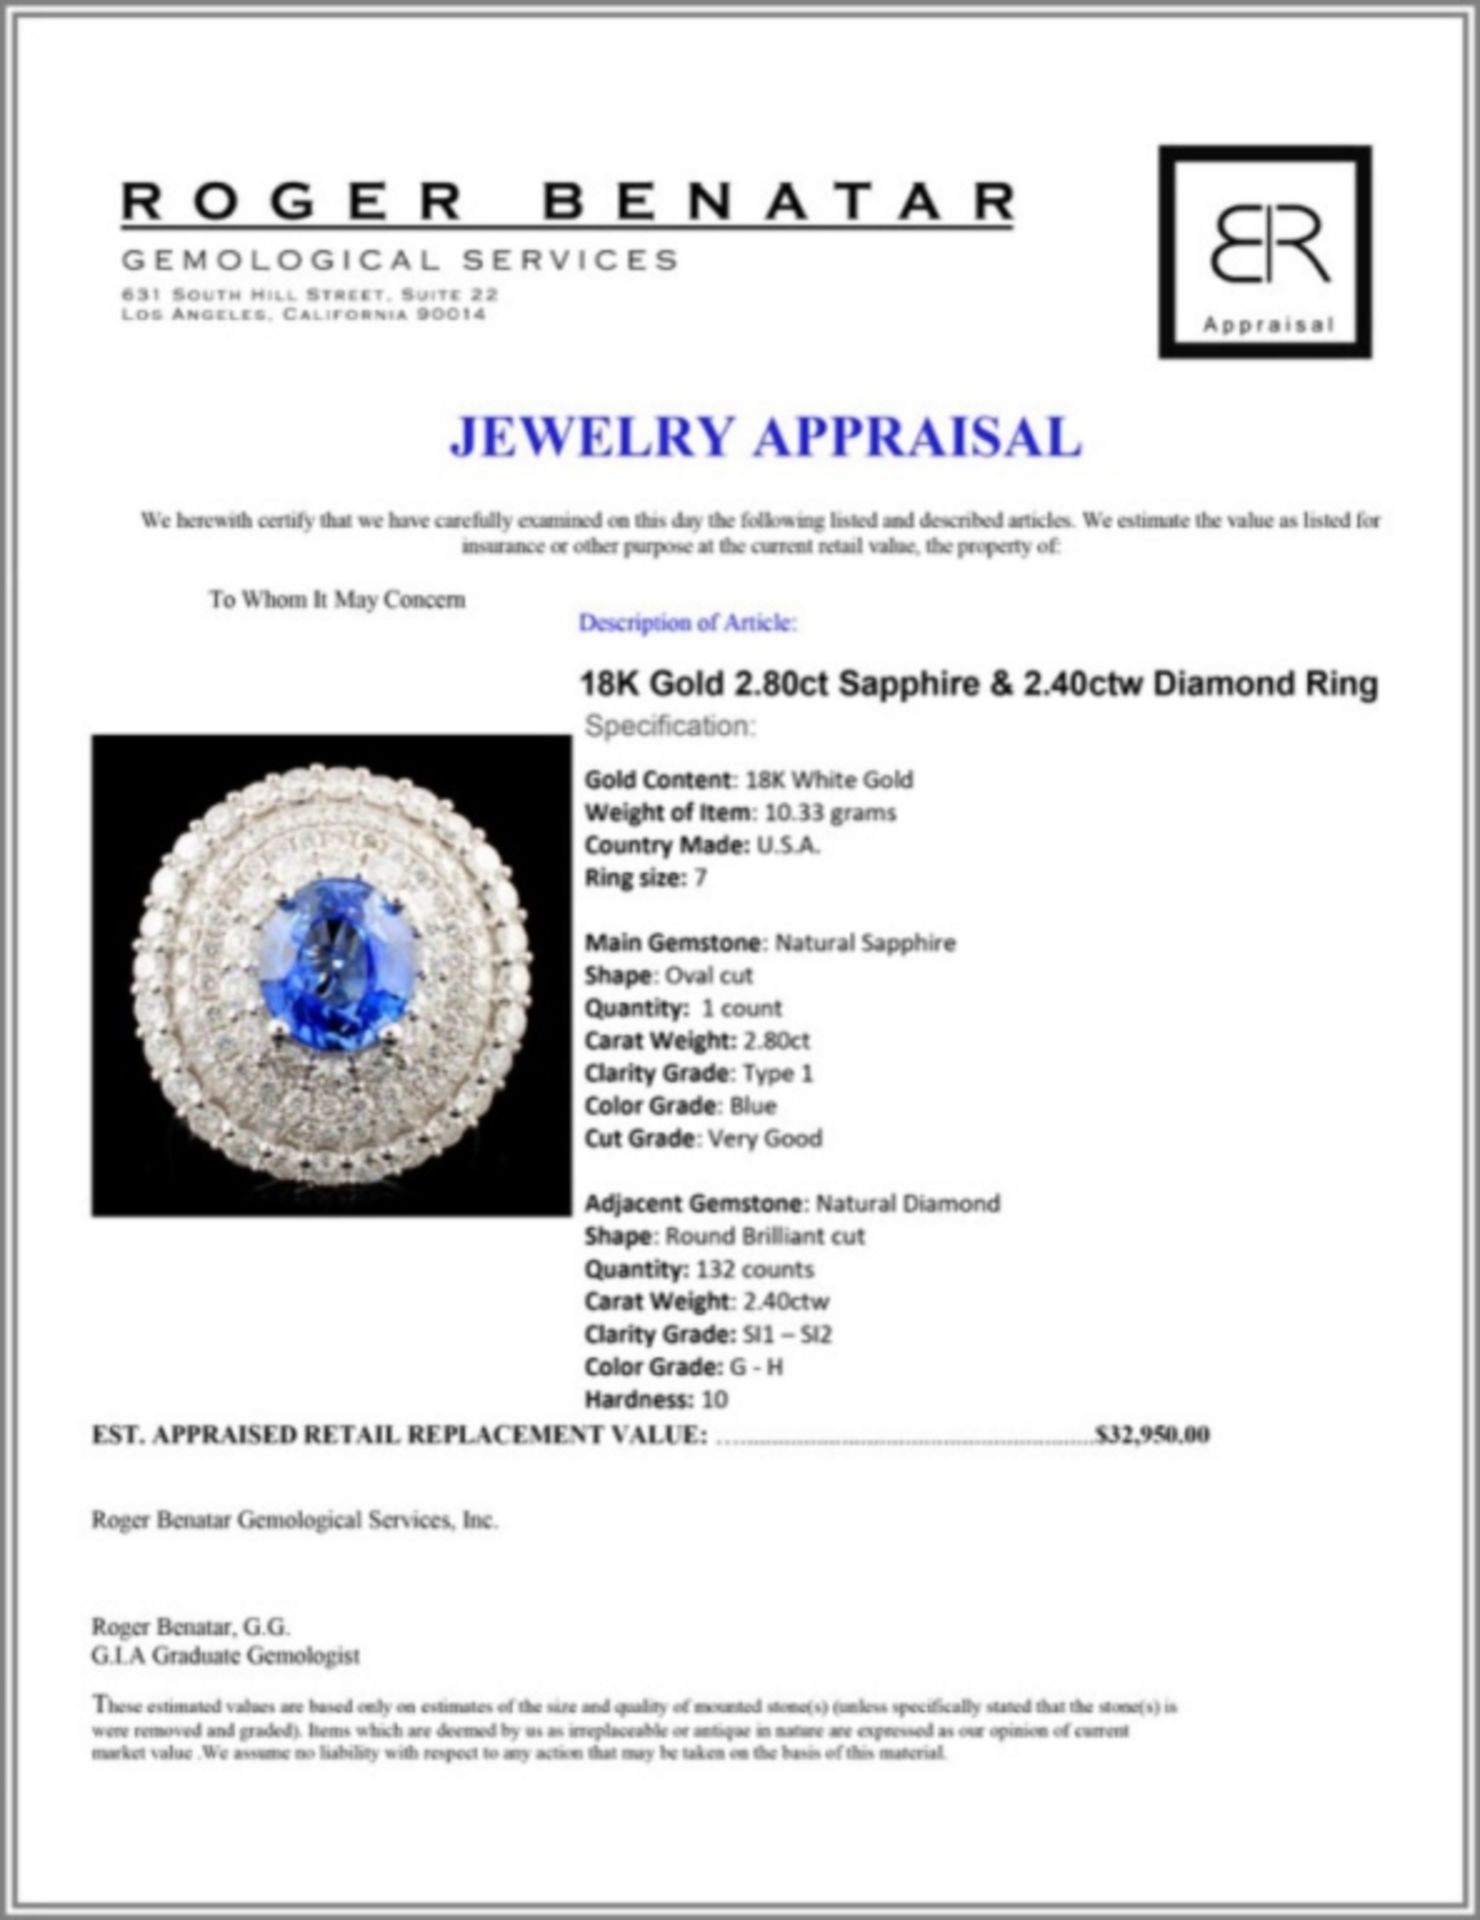 18K Gold 2.80ct Sapphire & 2.40ctw Diamond Ring - Image 4 of 4